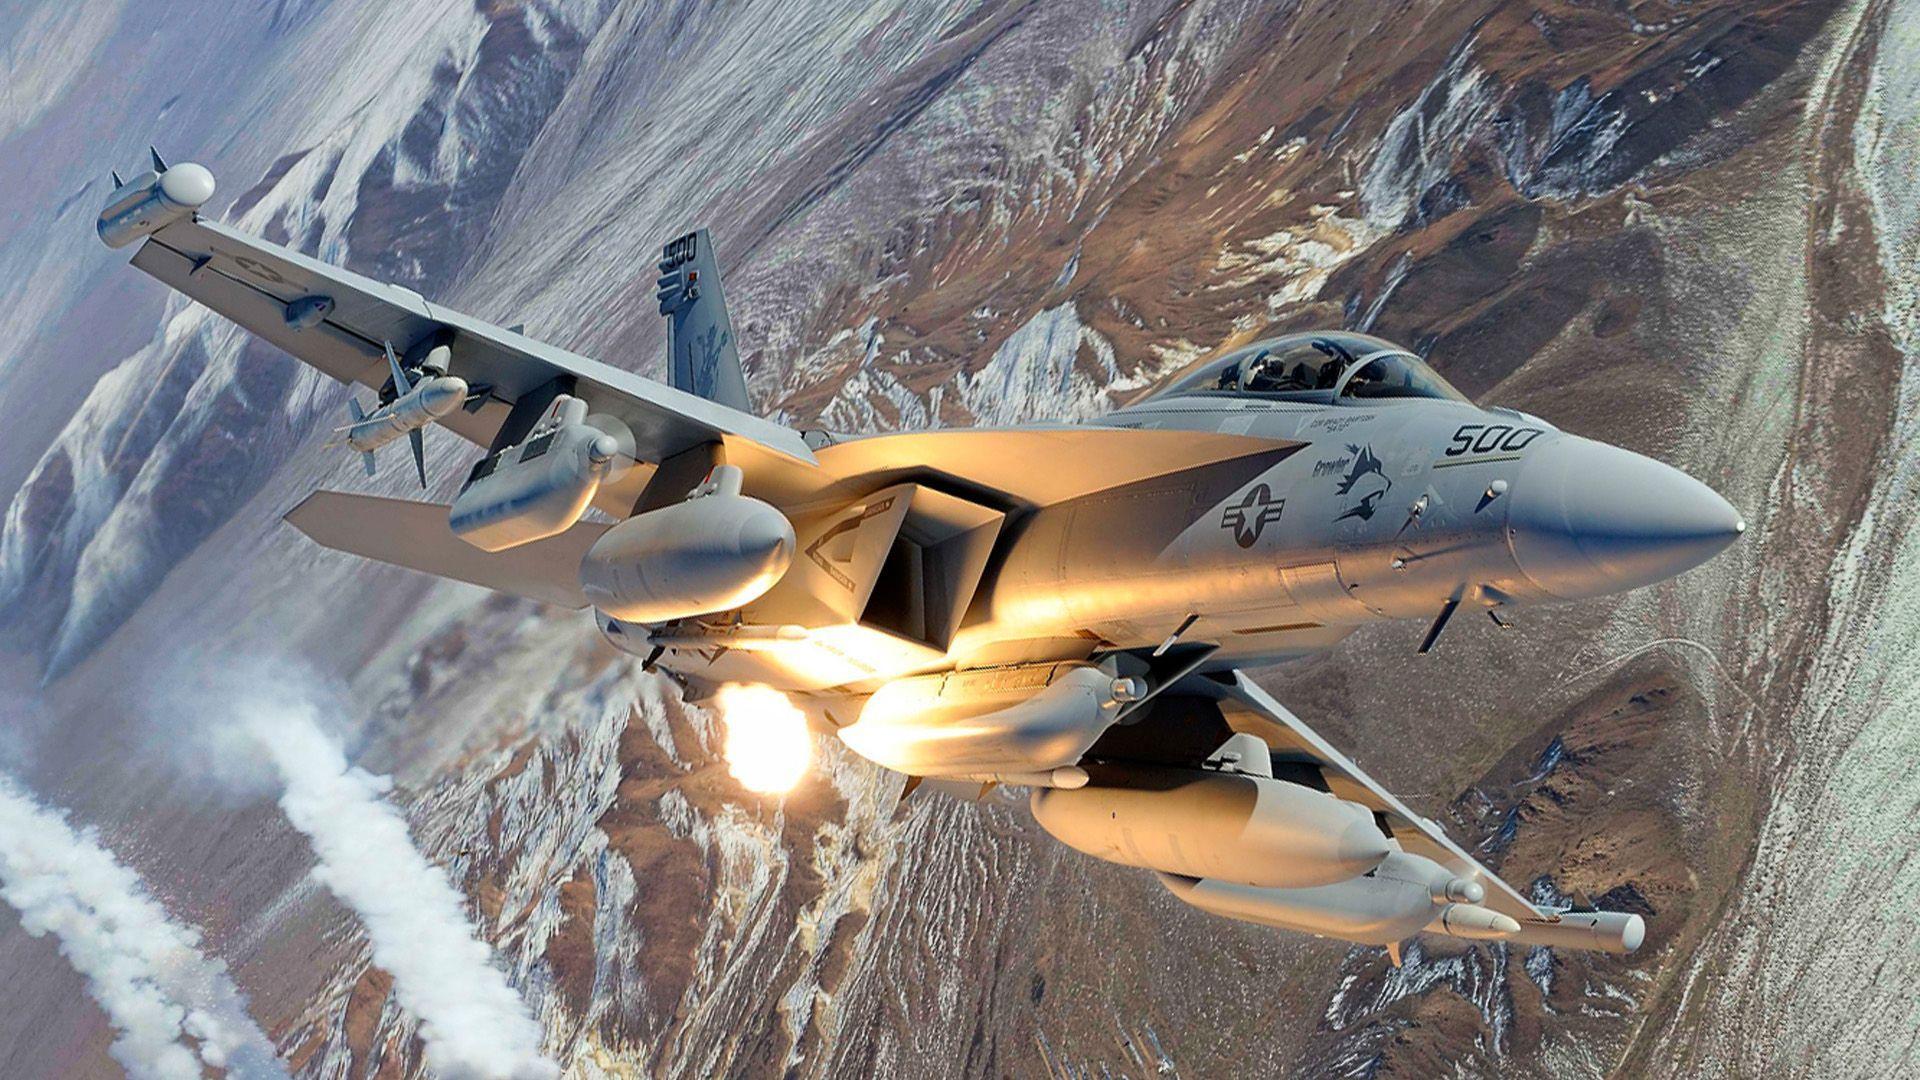 18 Hornet Wallpaper Hd 491 Images Hd Wallpapers - Us Navy Fighter Jets Firimg Missiles - HD Wallpaper 